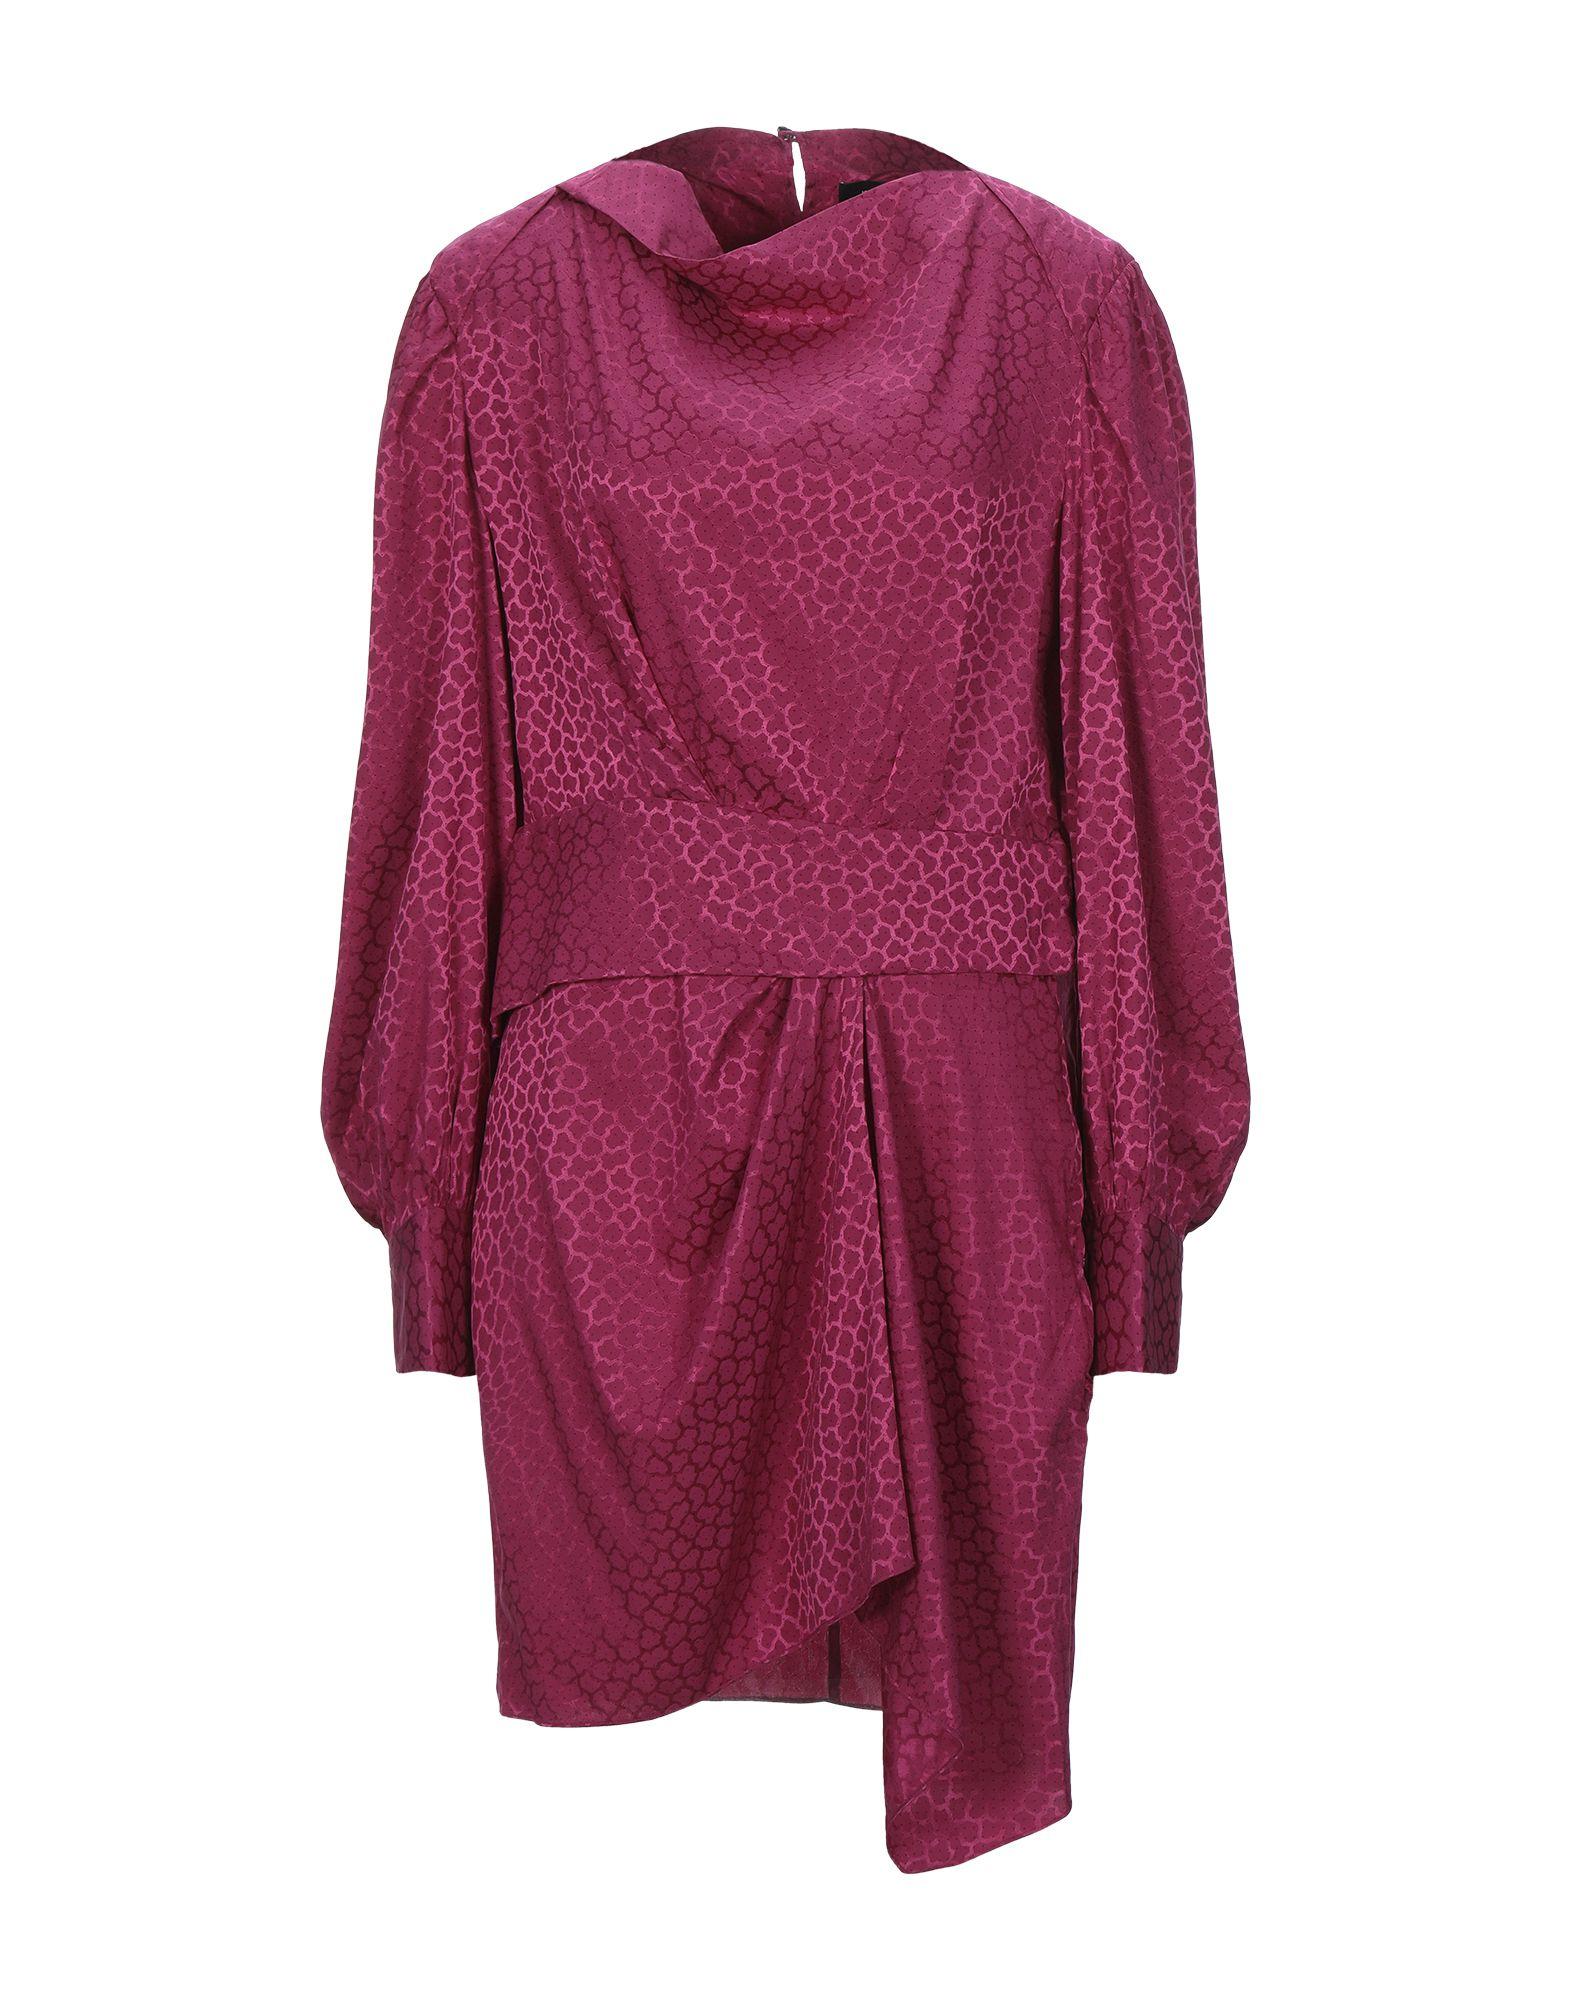 Isabel Marant Satin Short Dress in Light Purple (Purple) - Lyst